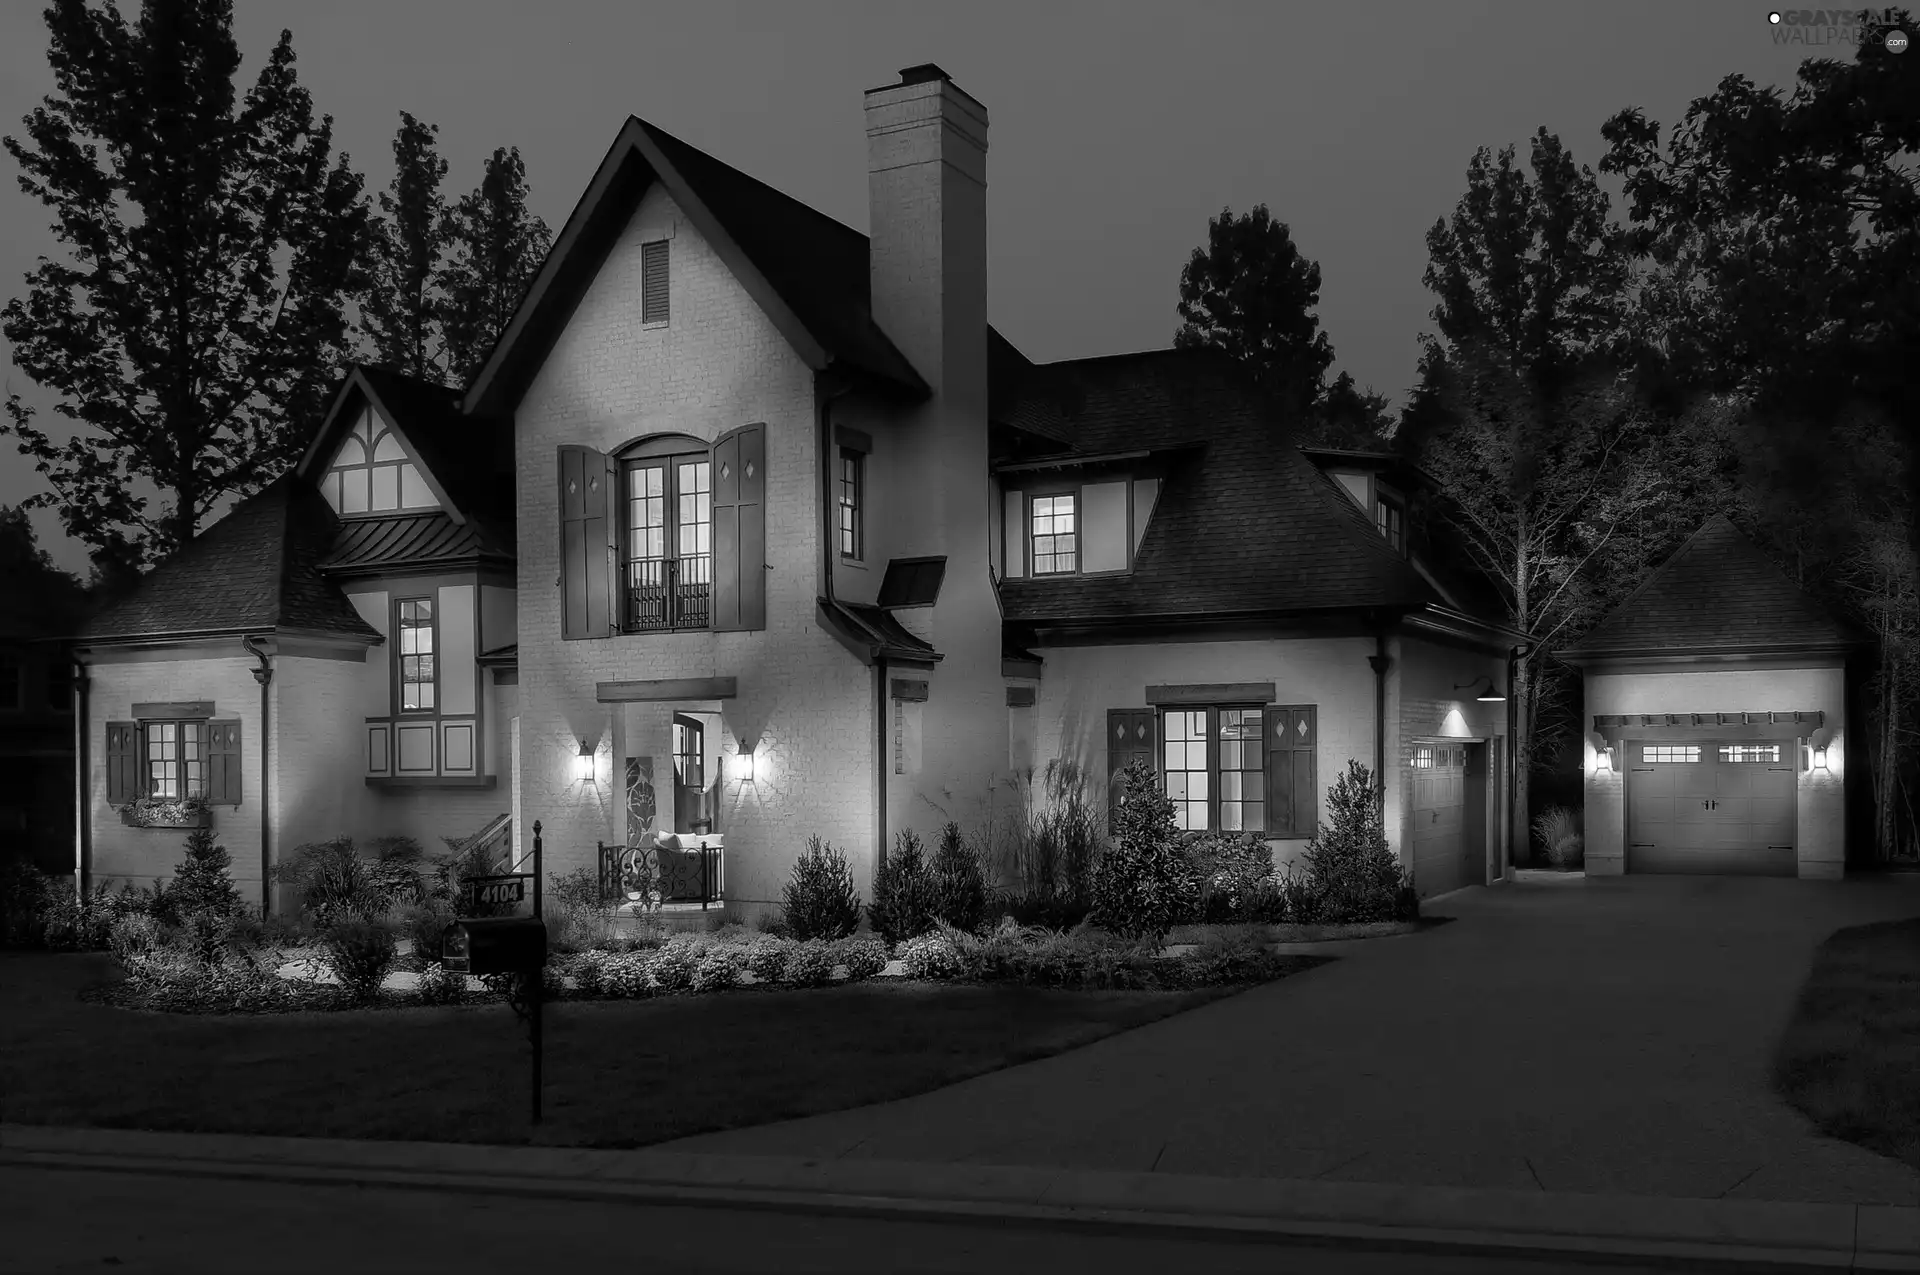 Floodlit, driveway, evening, house